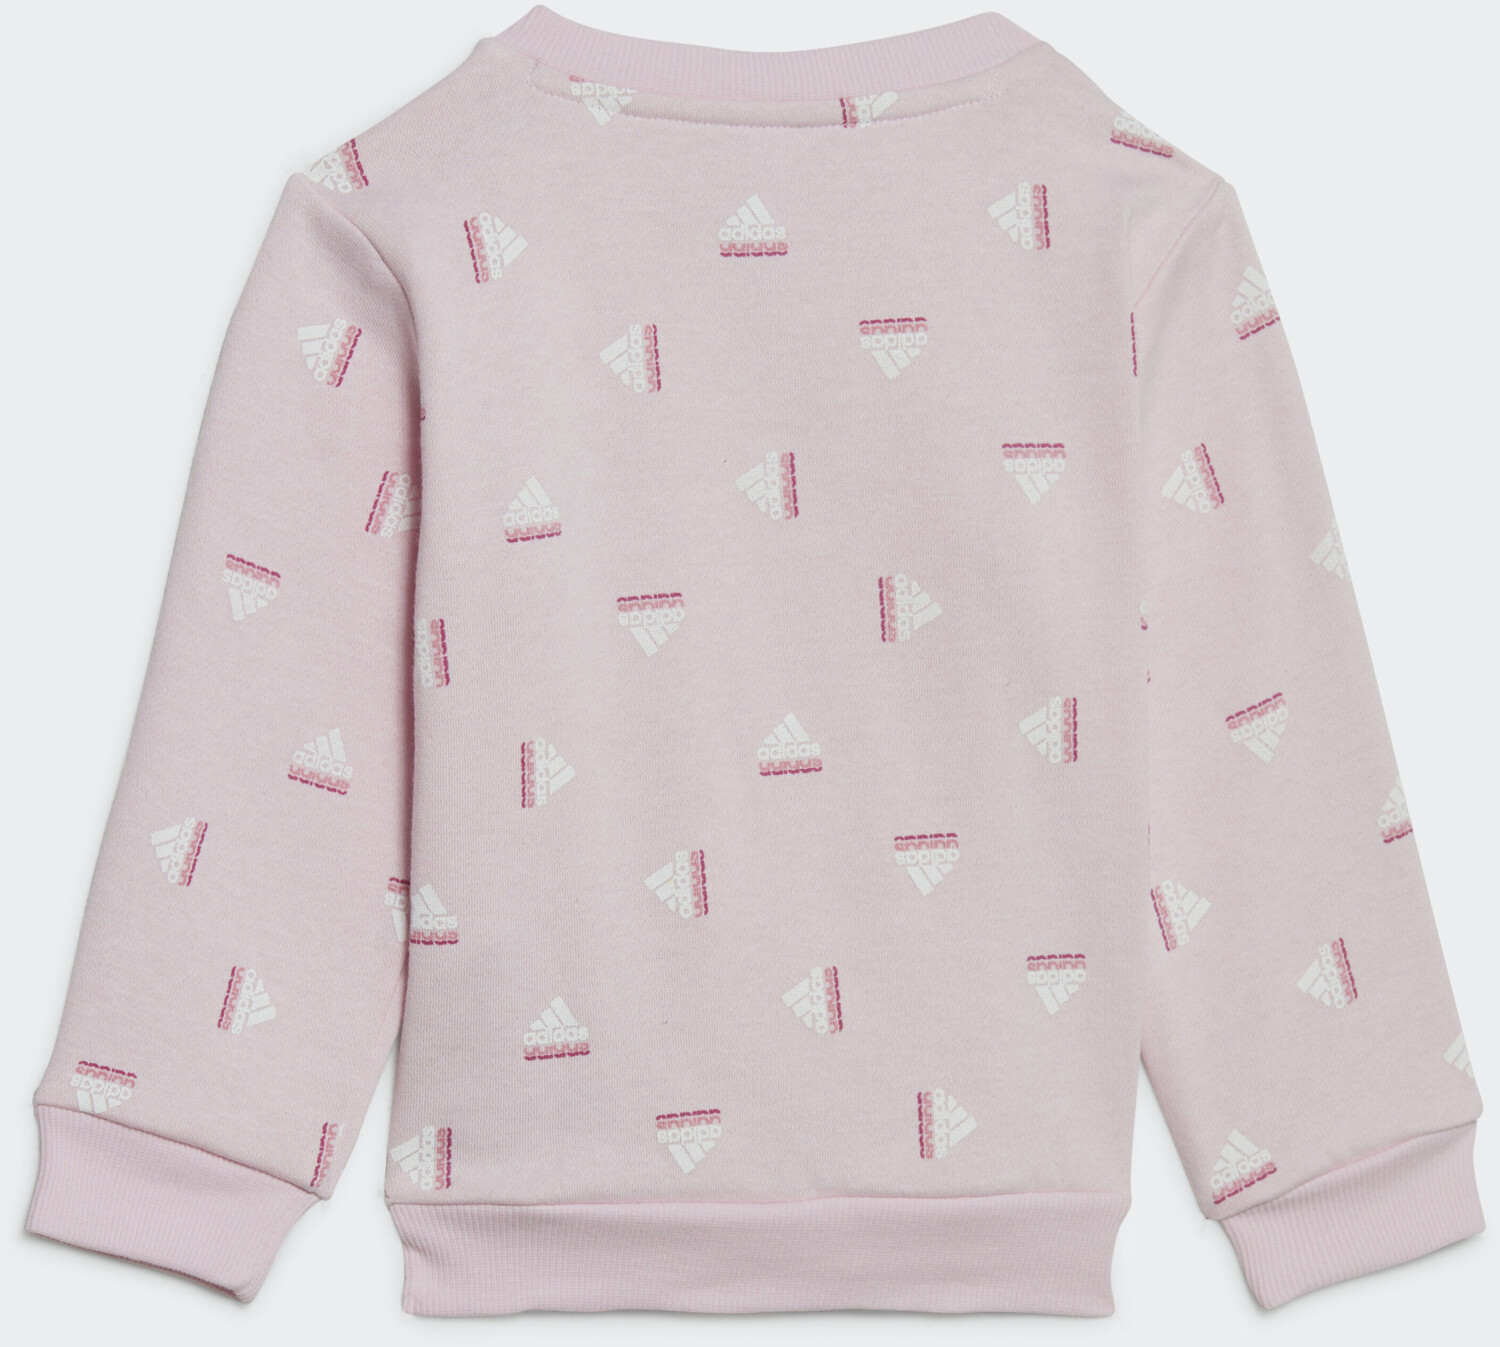 Adidas Fleece Jogginganzug Preisvergleich pink/white 30,19 € Love | Clear Brand (IC0452) ab Kids bei